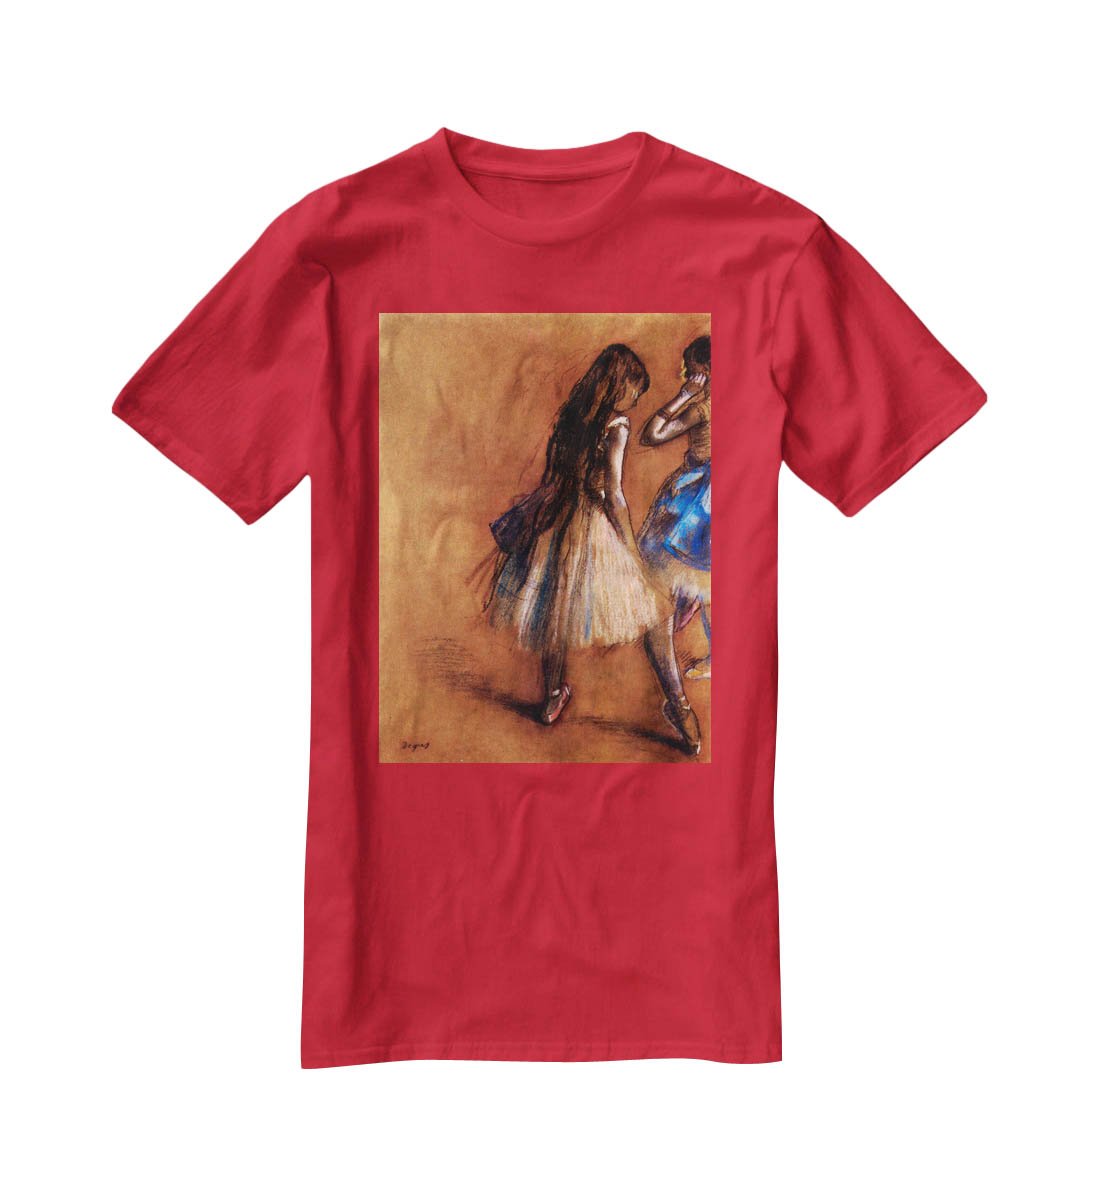 Two dancers 1 by Degas T-Shirt - Canvas Art Rocks - 4